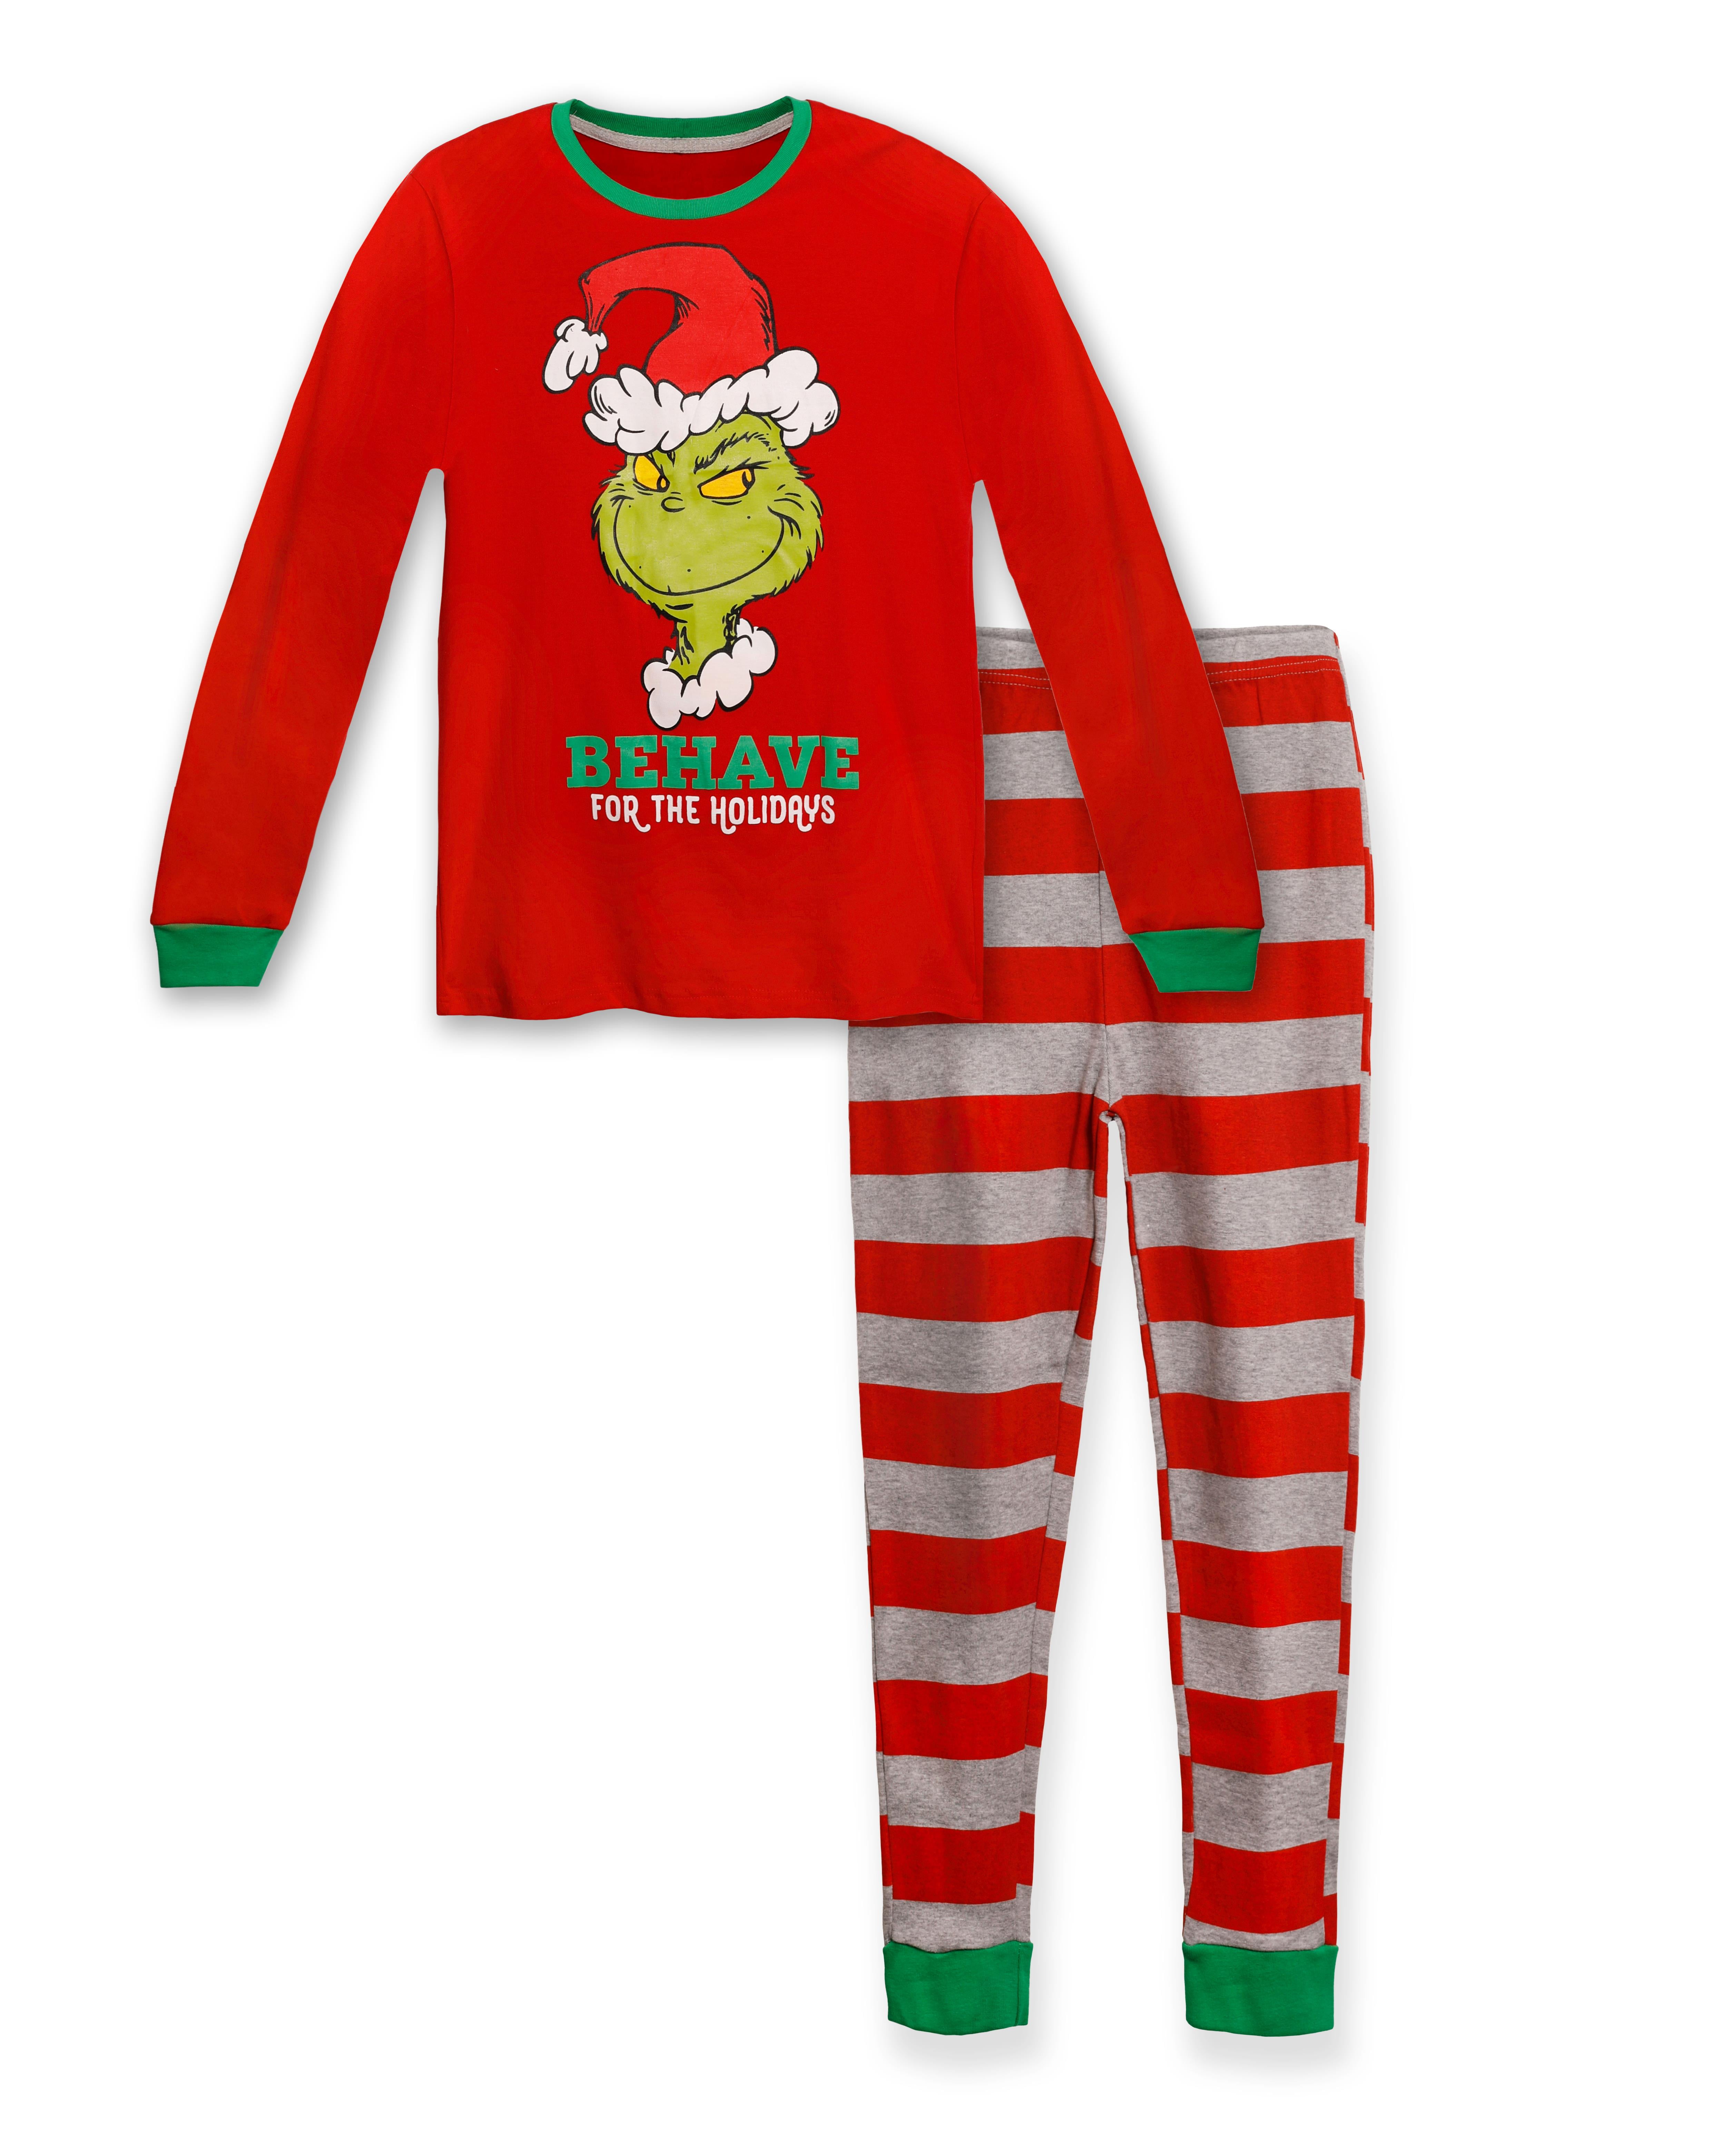 NEW Carters Baby Toddler Santa Pajamas Sizes 12M thru 3T Pants Christmas Costume 